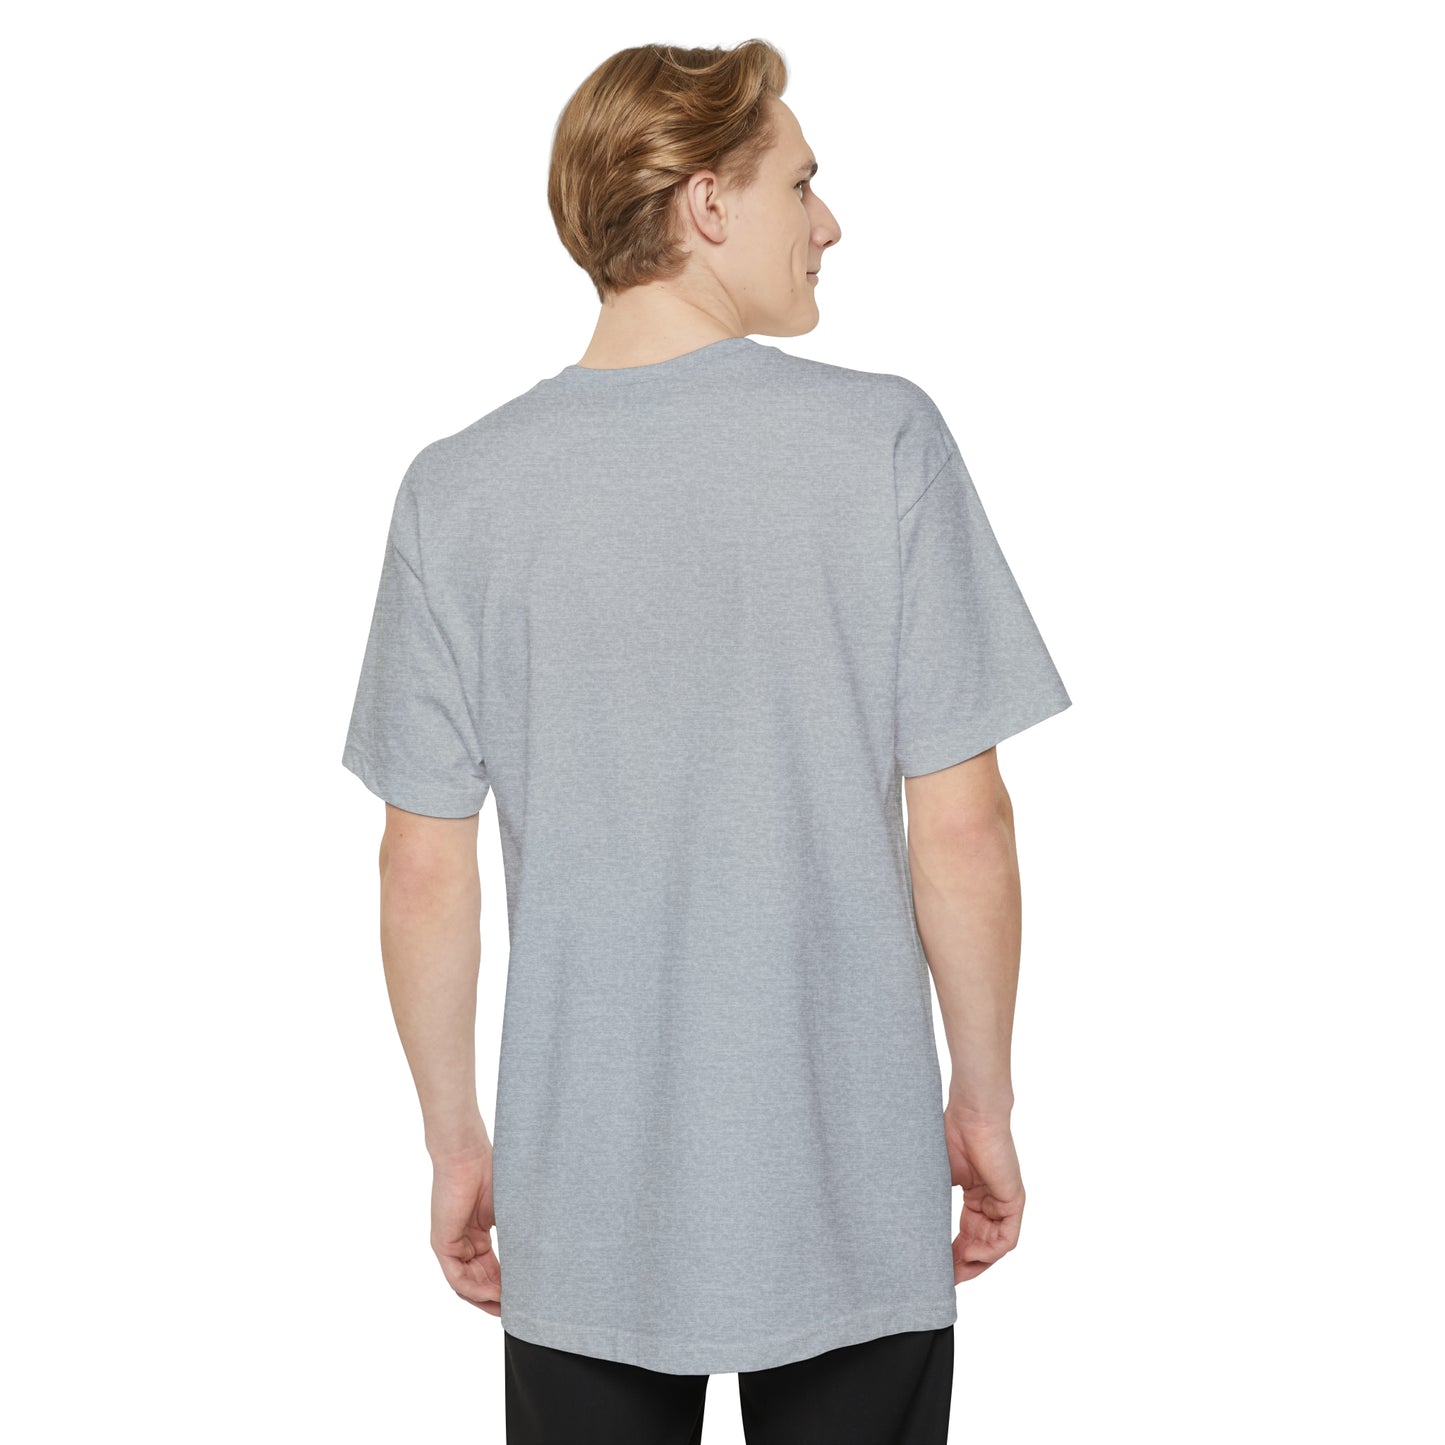 03b. Tall Size T-Shirt - Wave Design